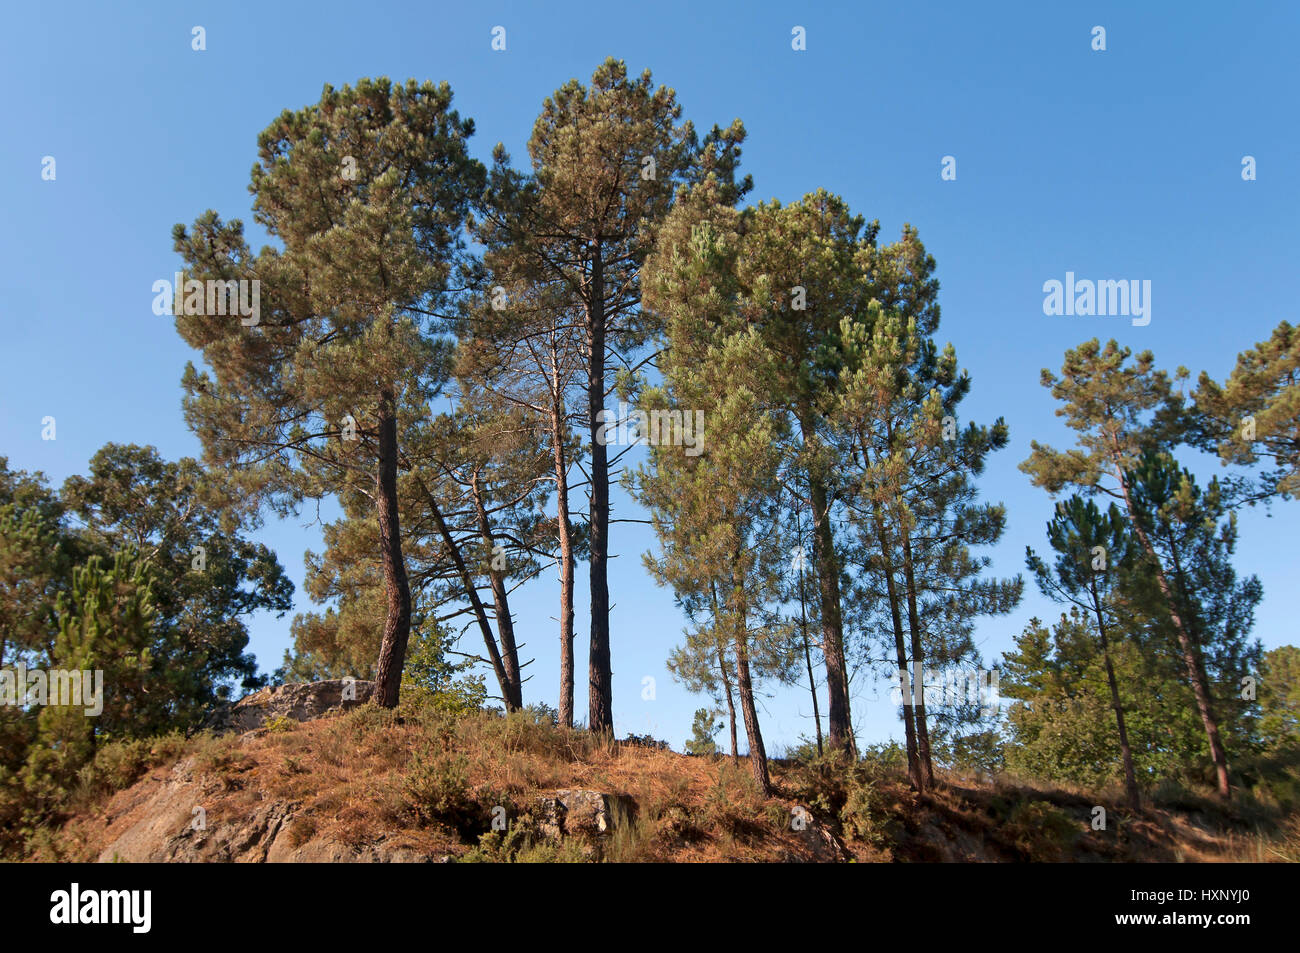 Pines, Santa Maria de Castromao - Celanova, Ourense province, Region of Galicia, Spain, Europe Stock Photo